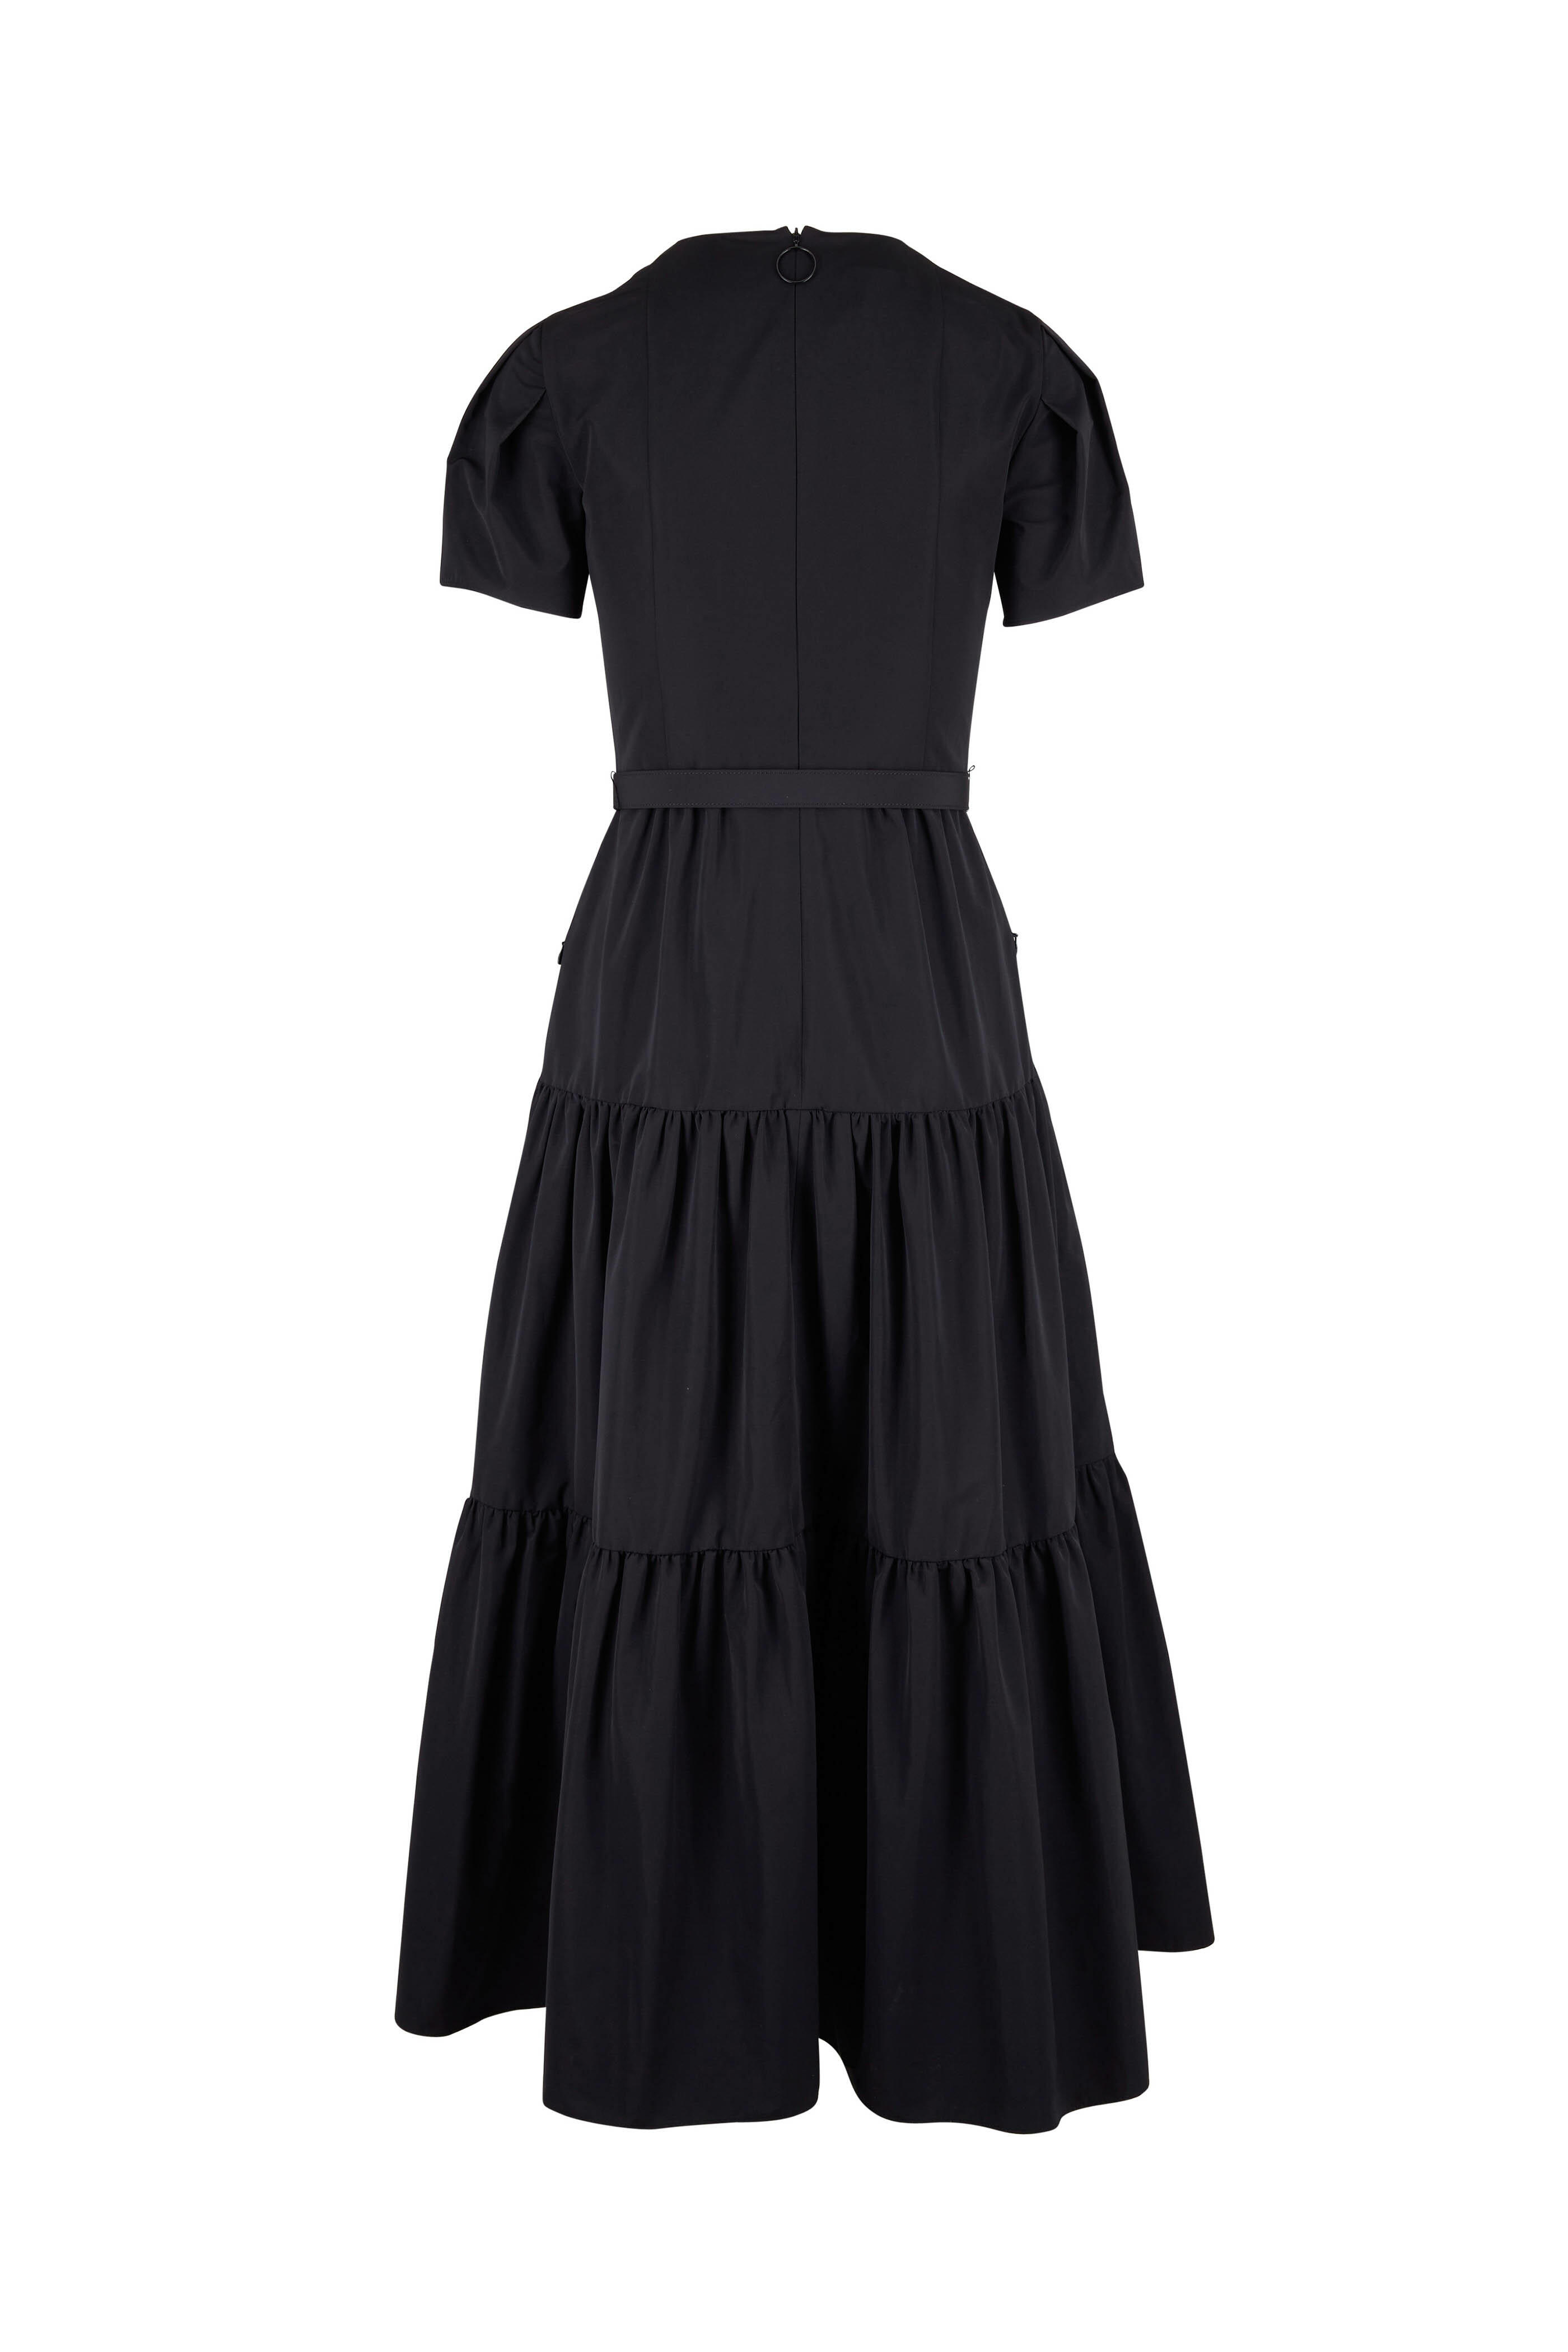 Akris Punto Dress Black Laser Cut Knit Size 8 Sleeveless Fit & Flare N –  Celebrity Owned